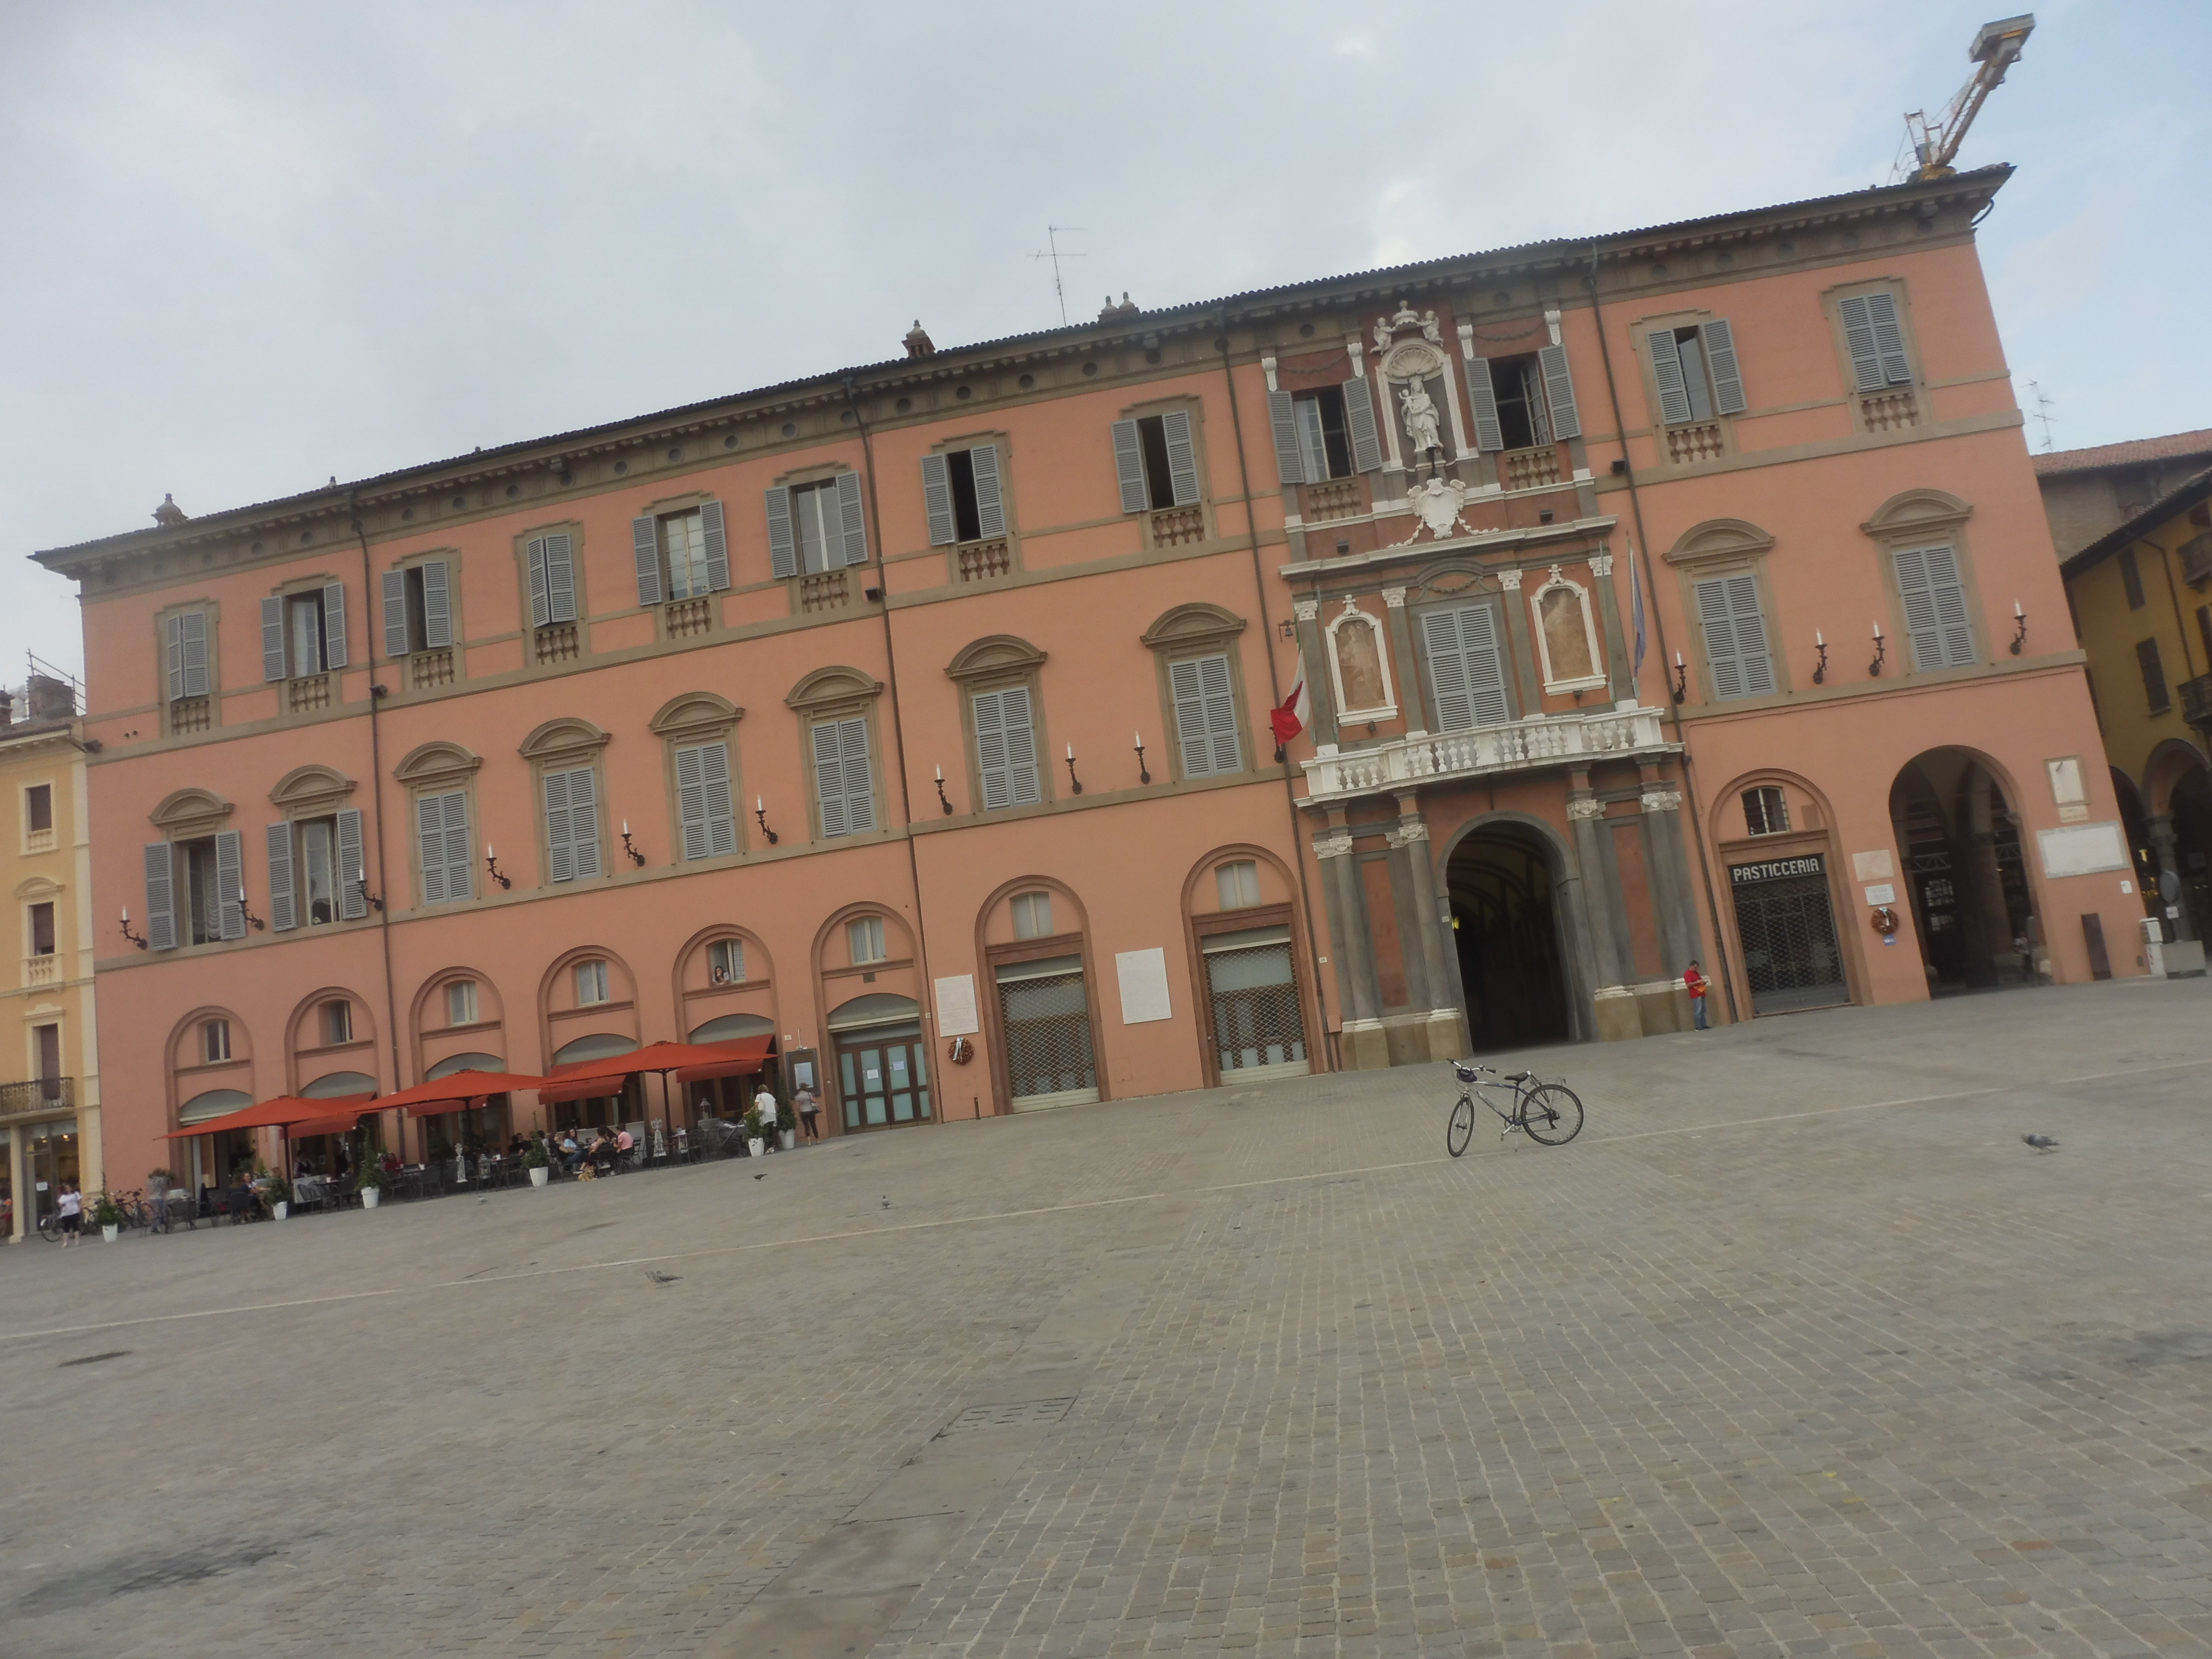 photo: https://upload.wikimedia.org/wikipedia/commons/3/3b/Palazzo_Comunale_-_panoramica.jpg